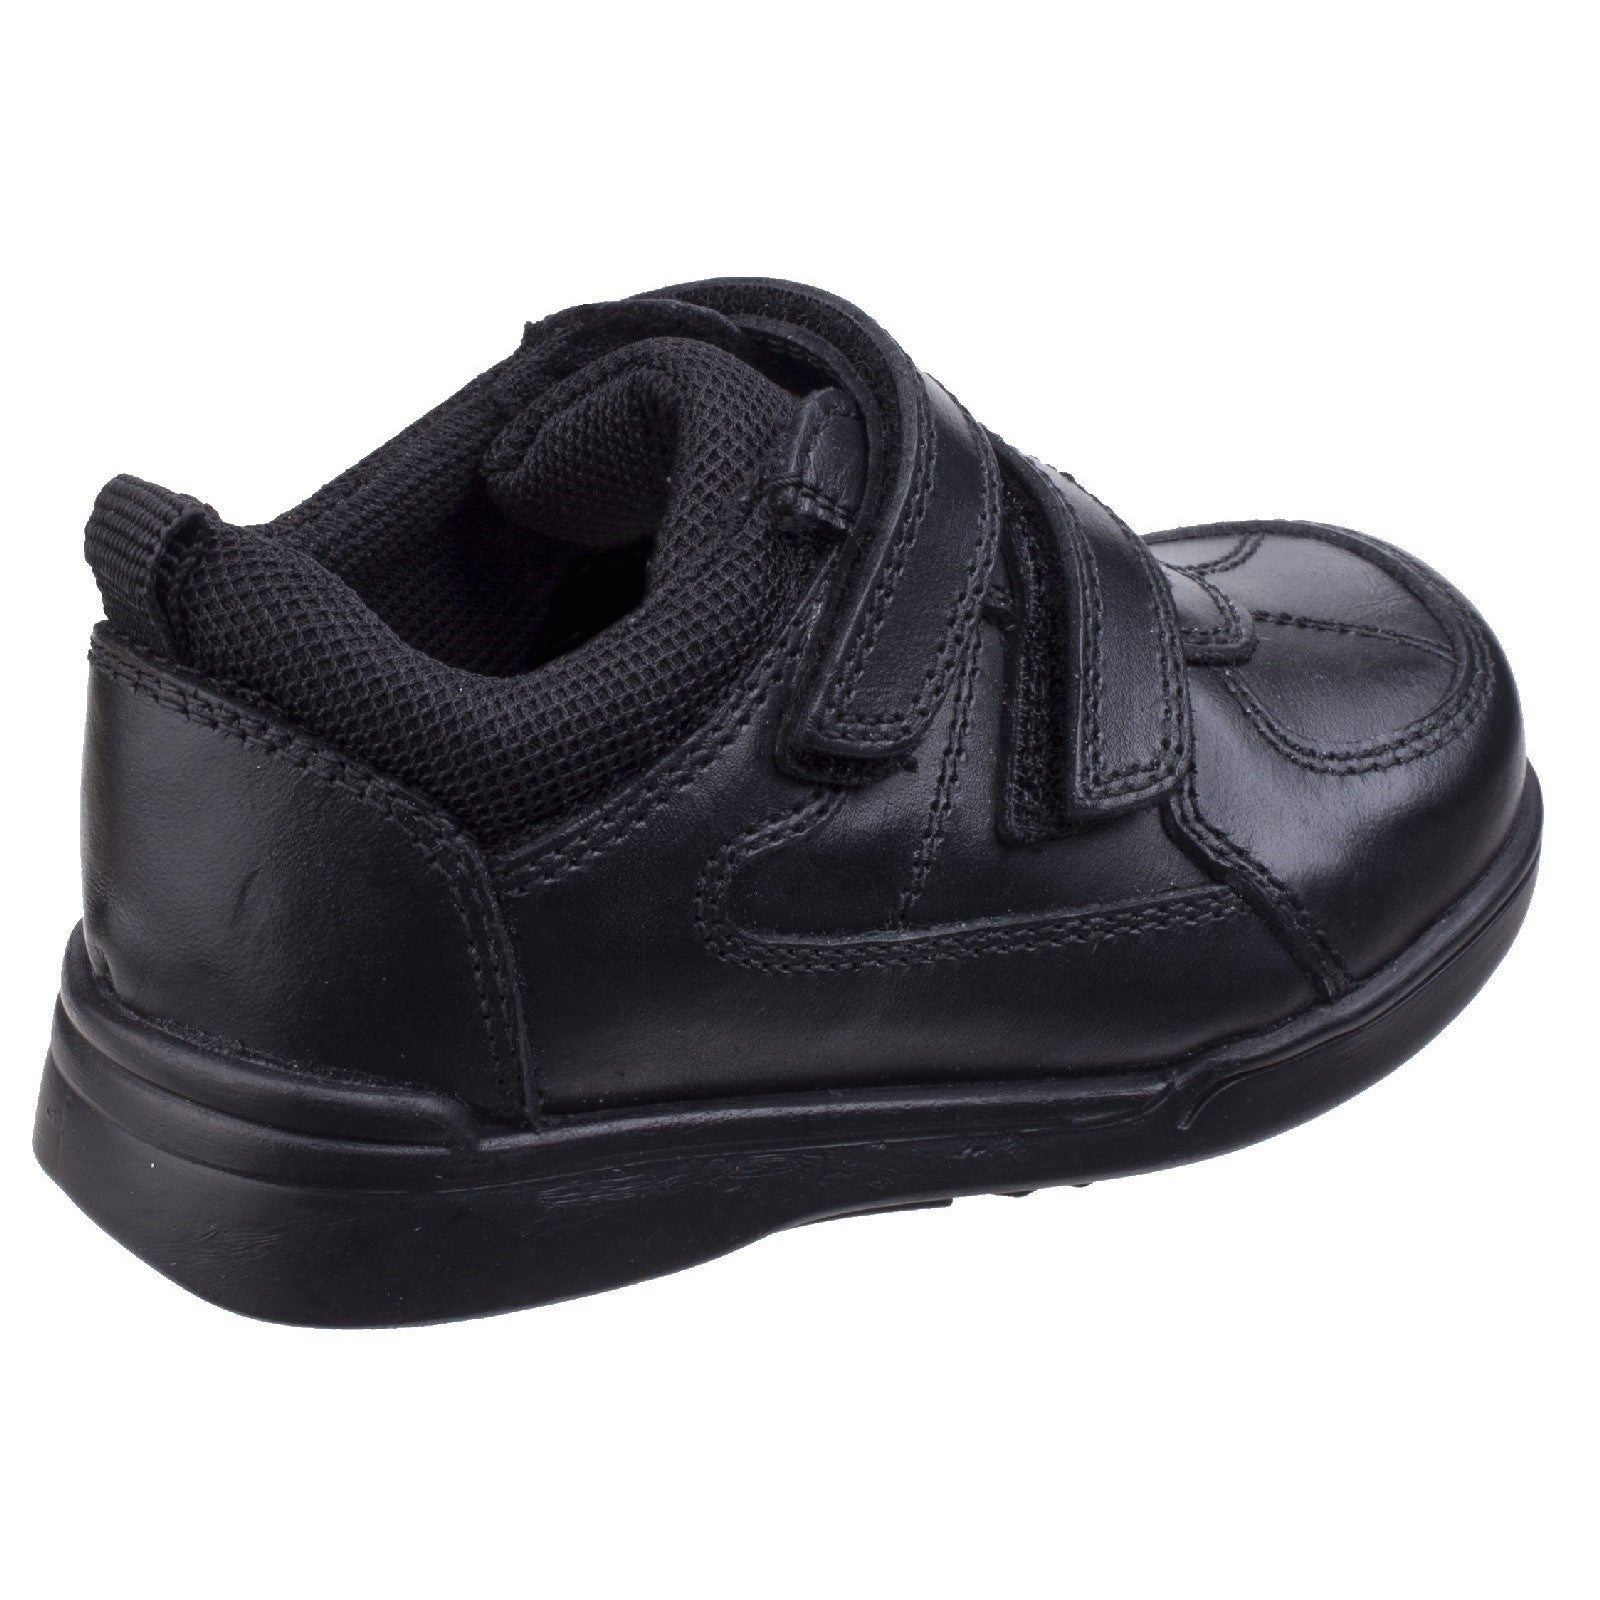 Hush Puppies Boys Liam Infant School Shoes - Black